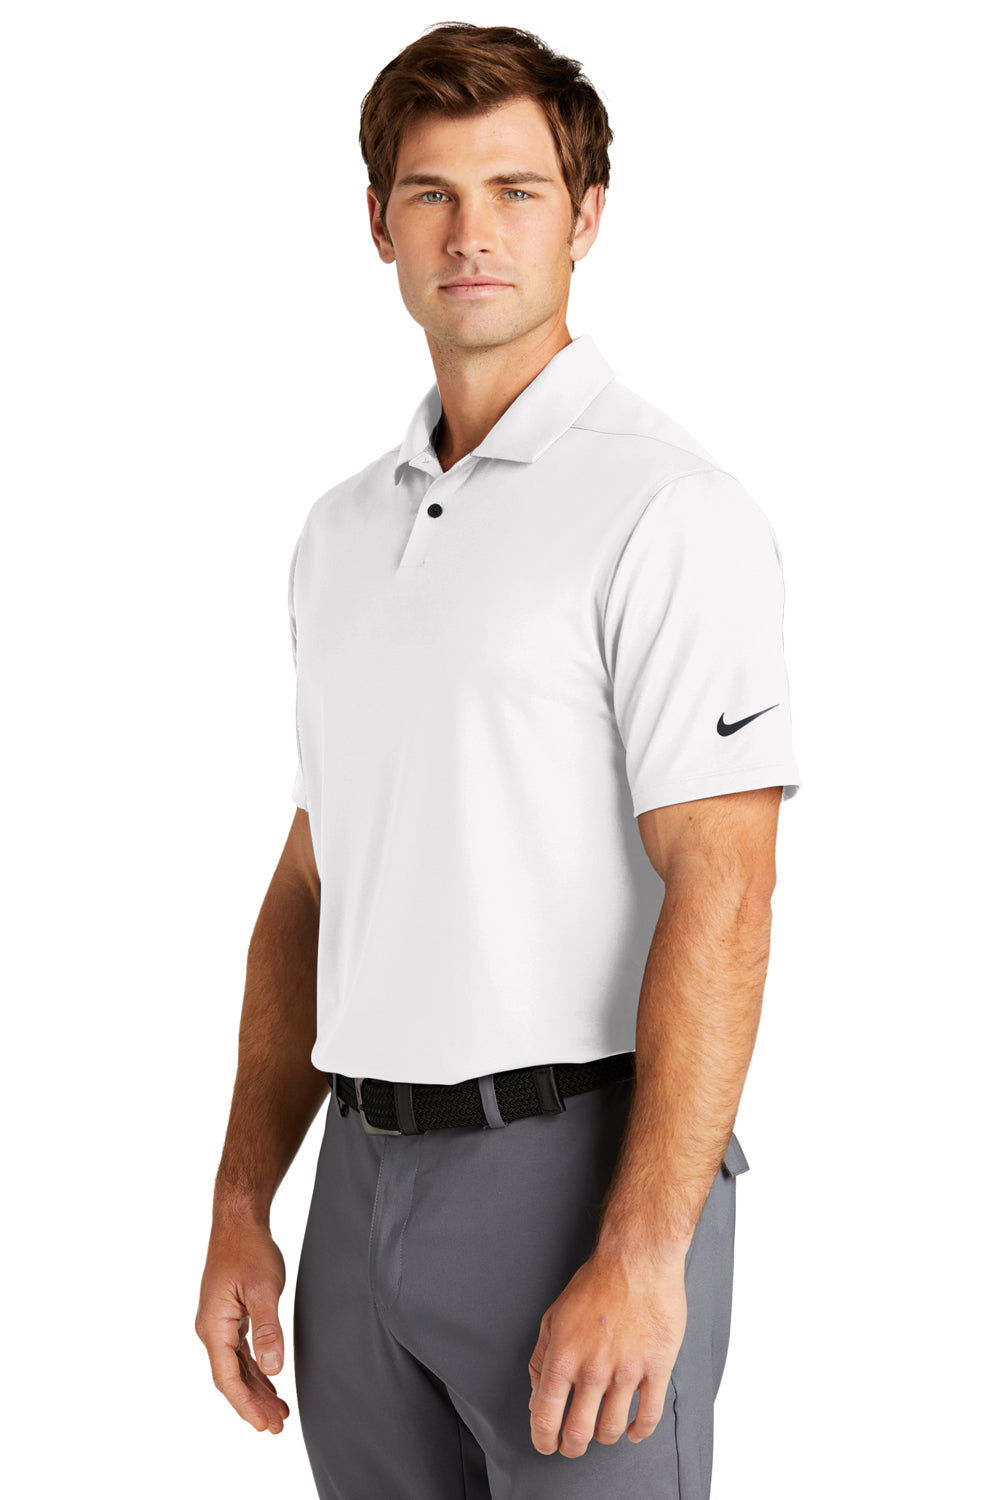 Nike NKDC2108 Mens Vapor Dri-Fit Moisture Wicking Short Sleeve Polo Shirt White Model 3Q